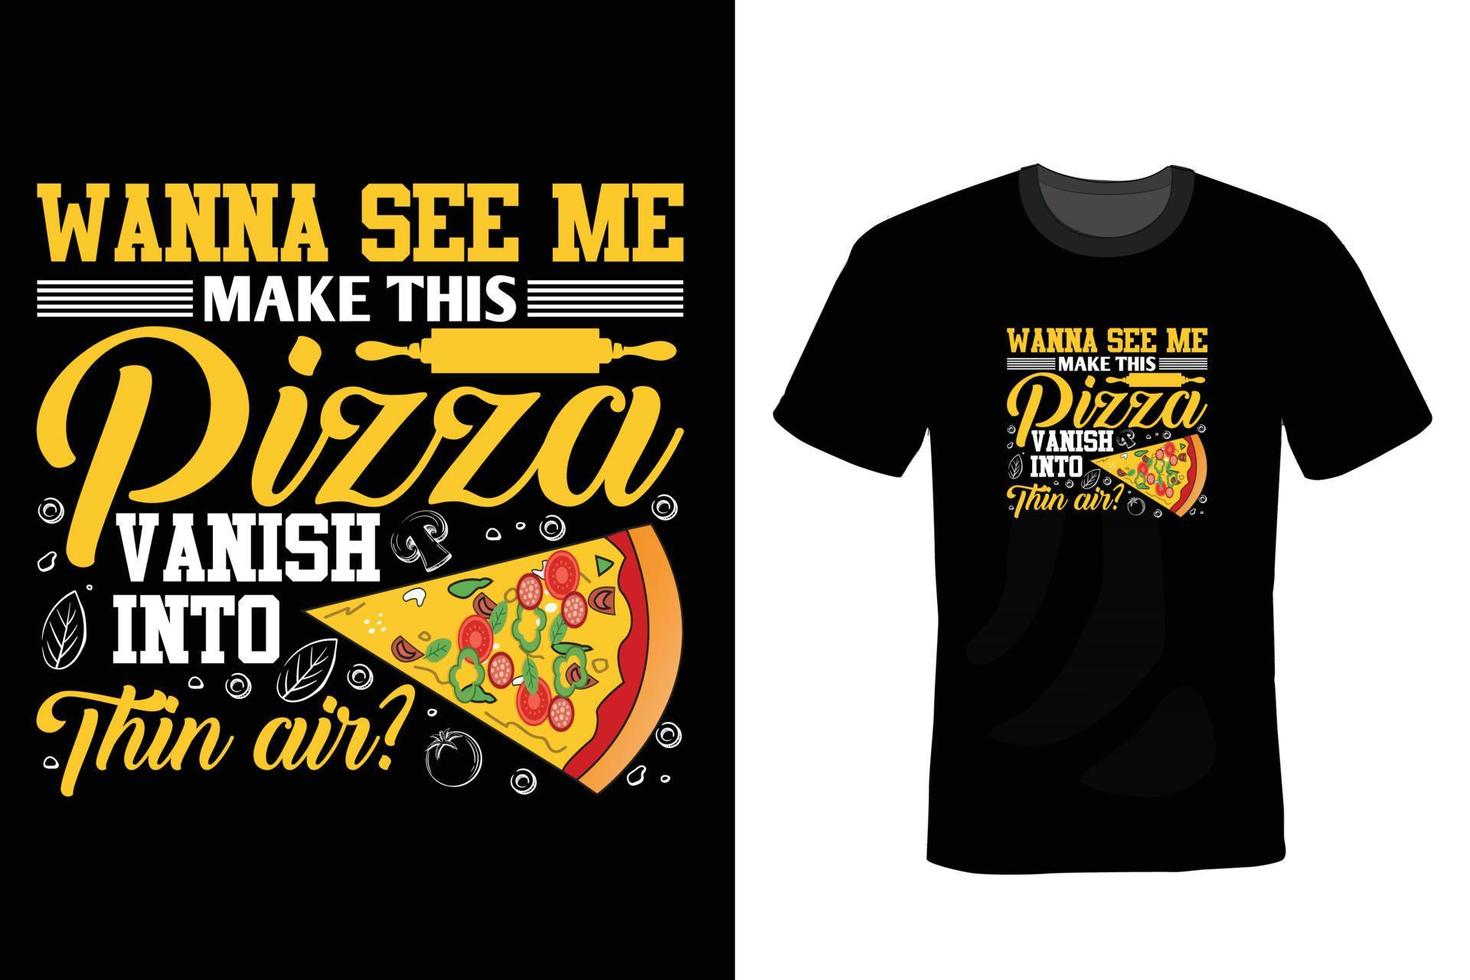 Pizza T shirt design, vintage, typography vector